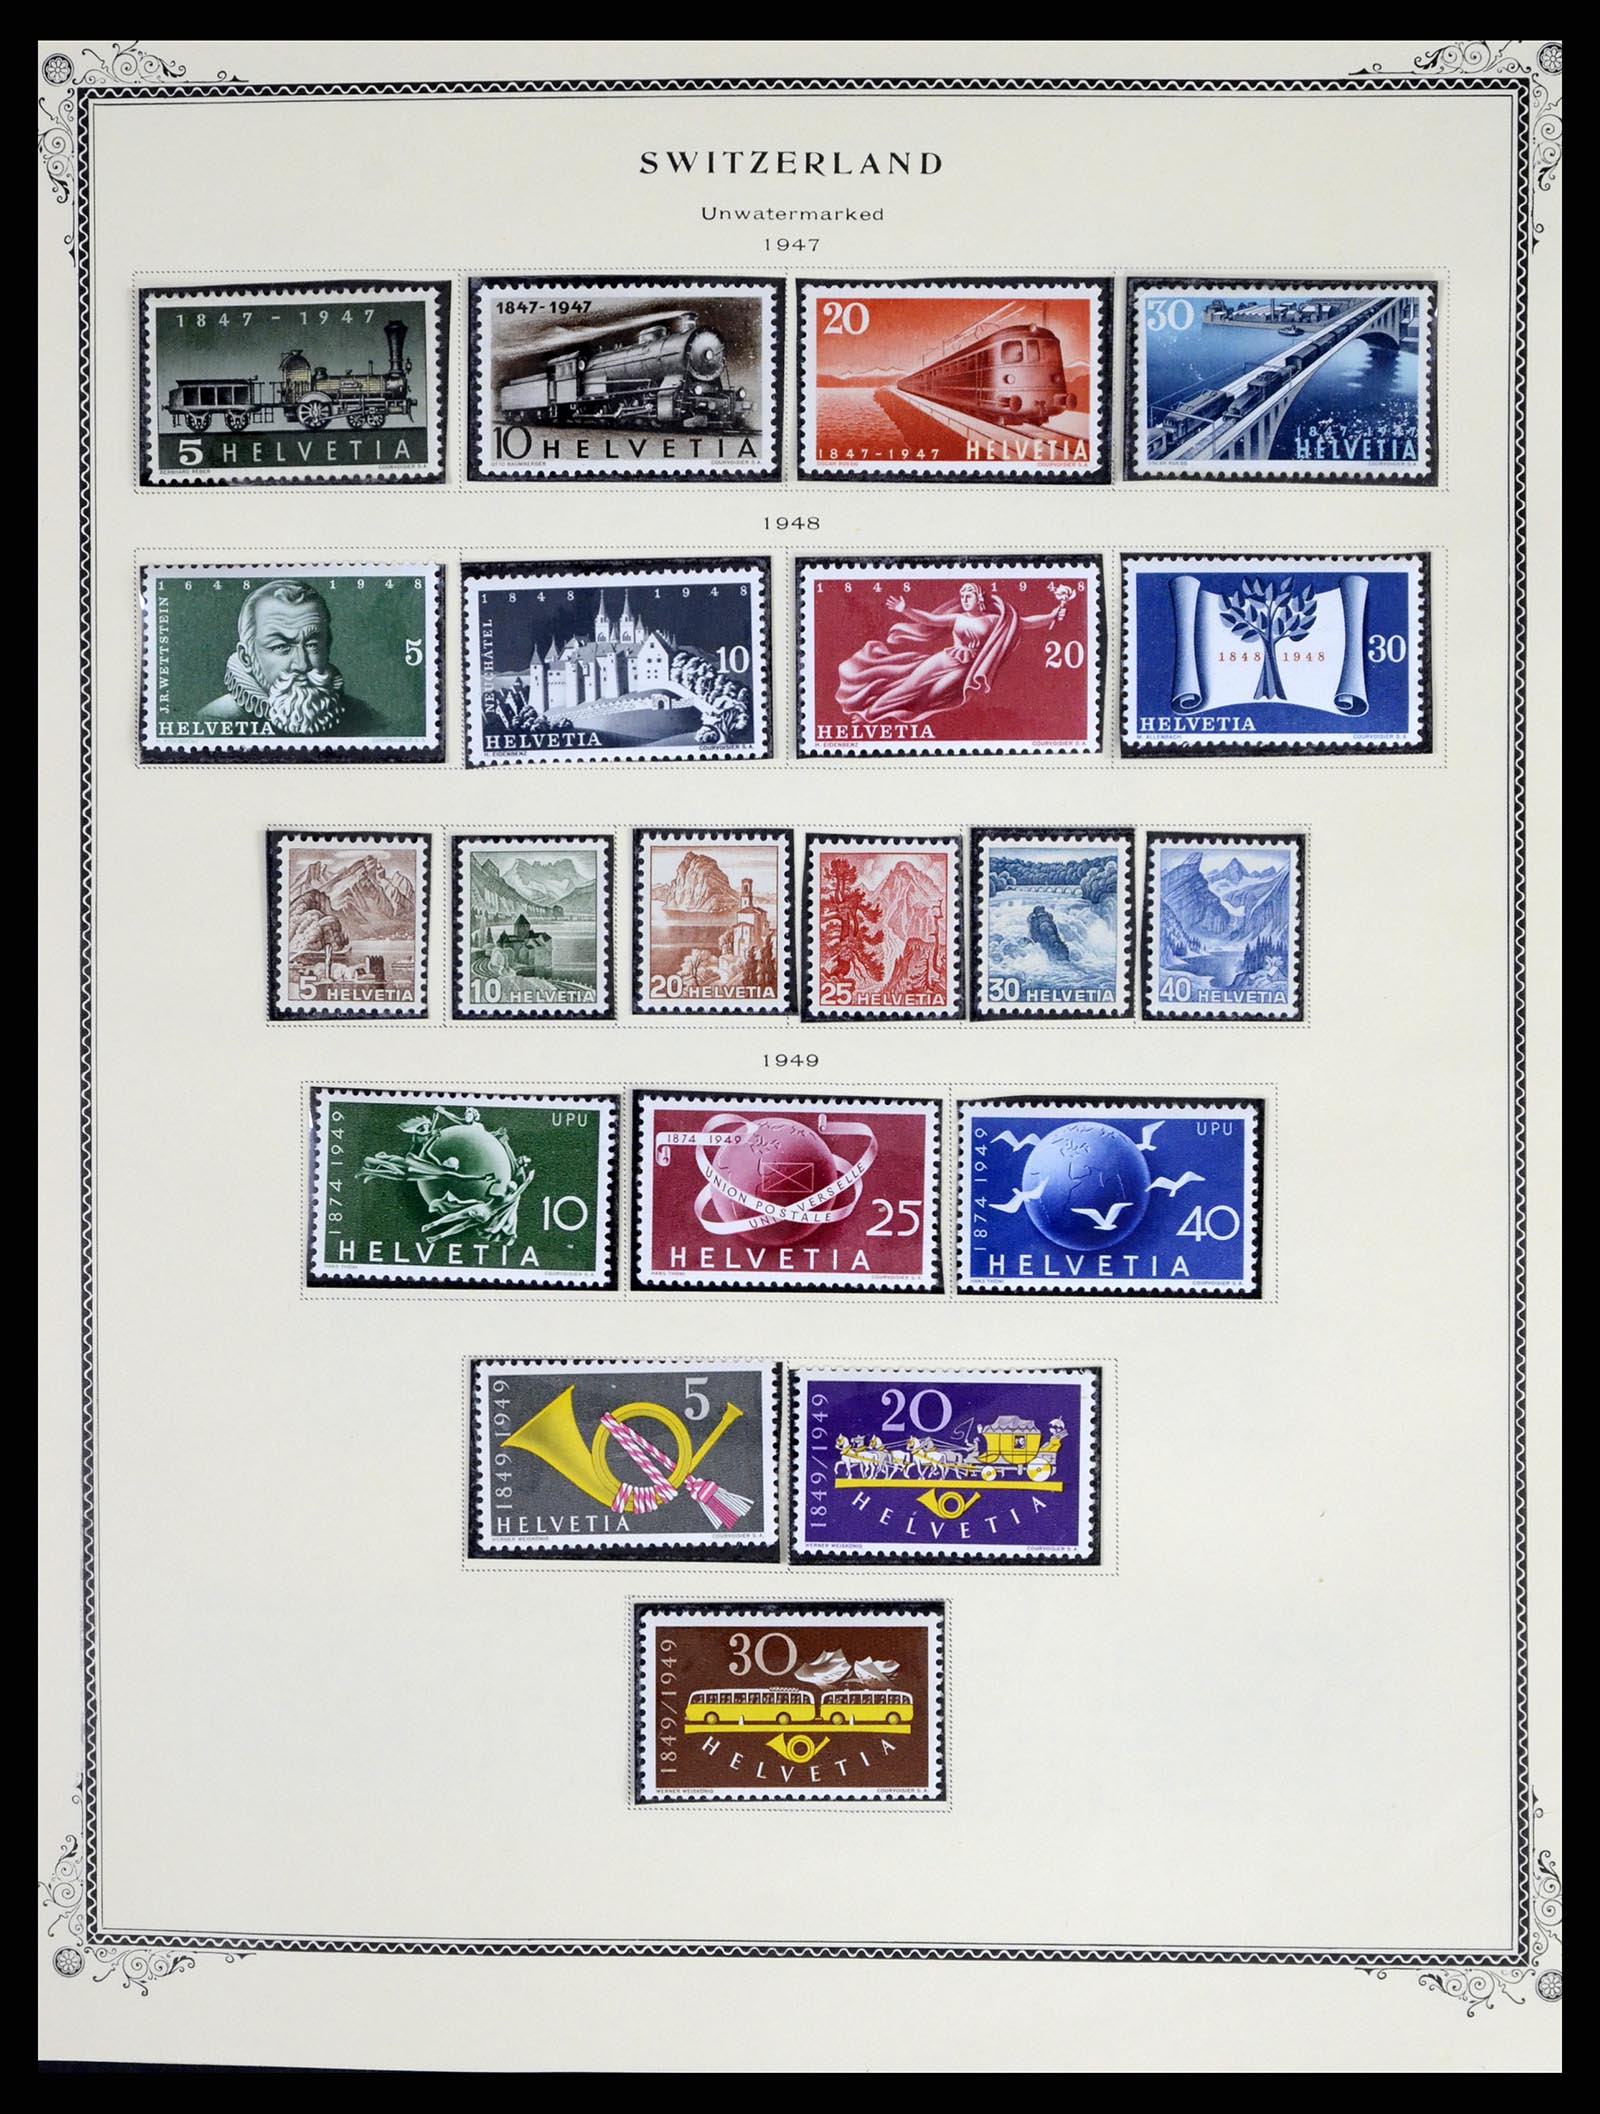 37641 016 - Stamp collection 37641 Switzerland 1855-1984.